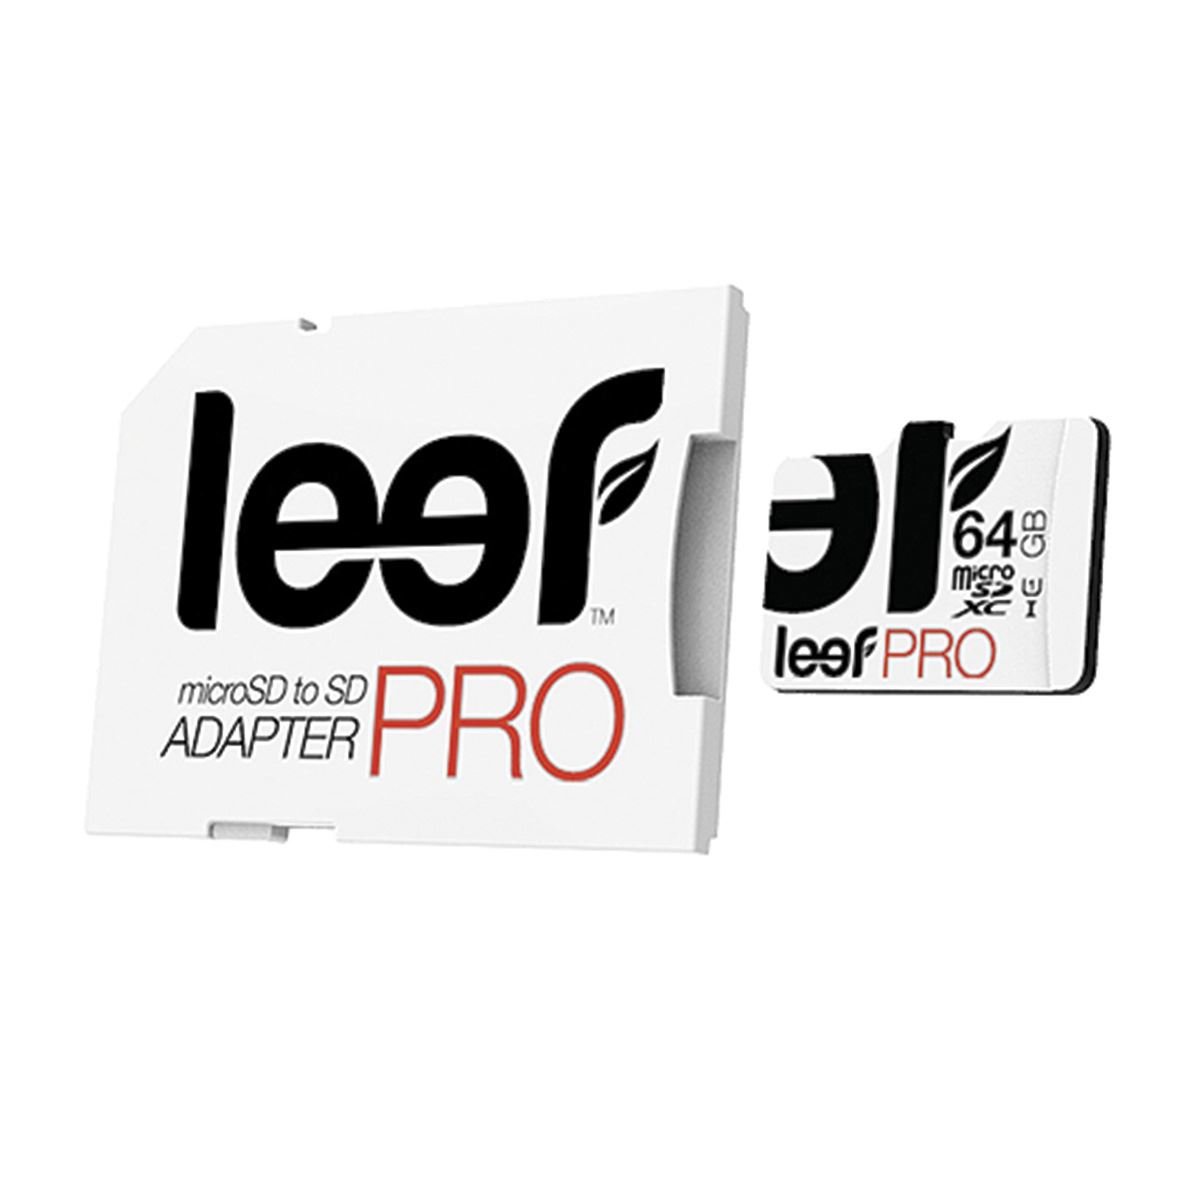 Tarjeta Leef Pro Micro SD 64gb WADA